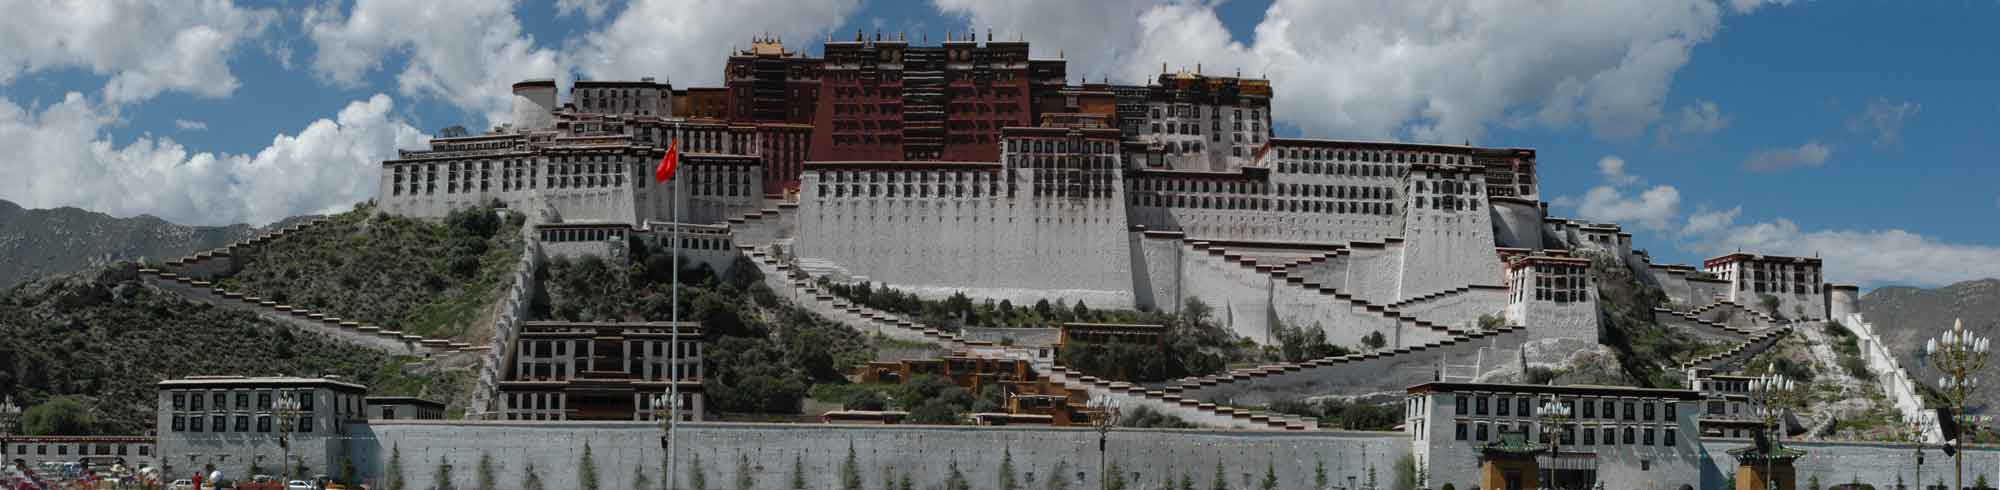 03 - Tibet - Lhasa, palacio de Potala